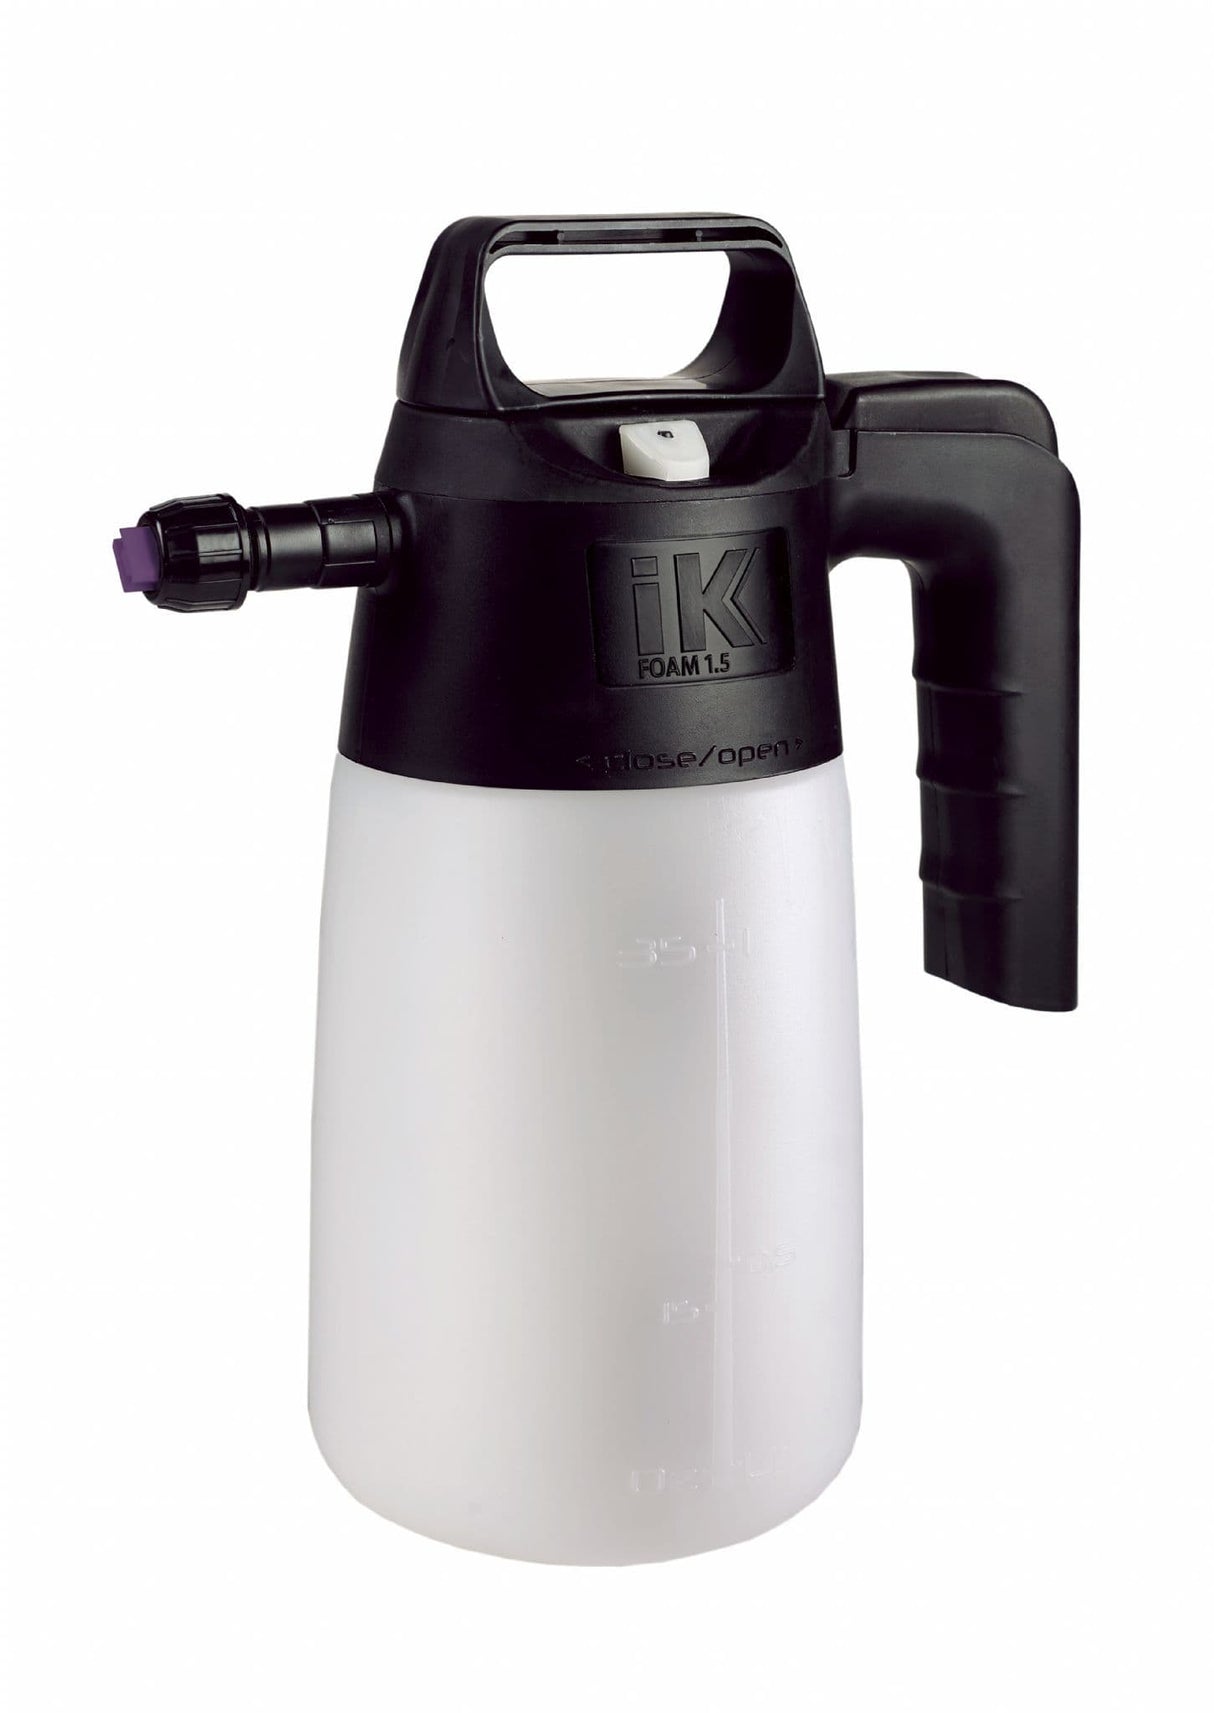 iK Foam 1.5 Handheld Pressure Sprayer